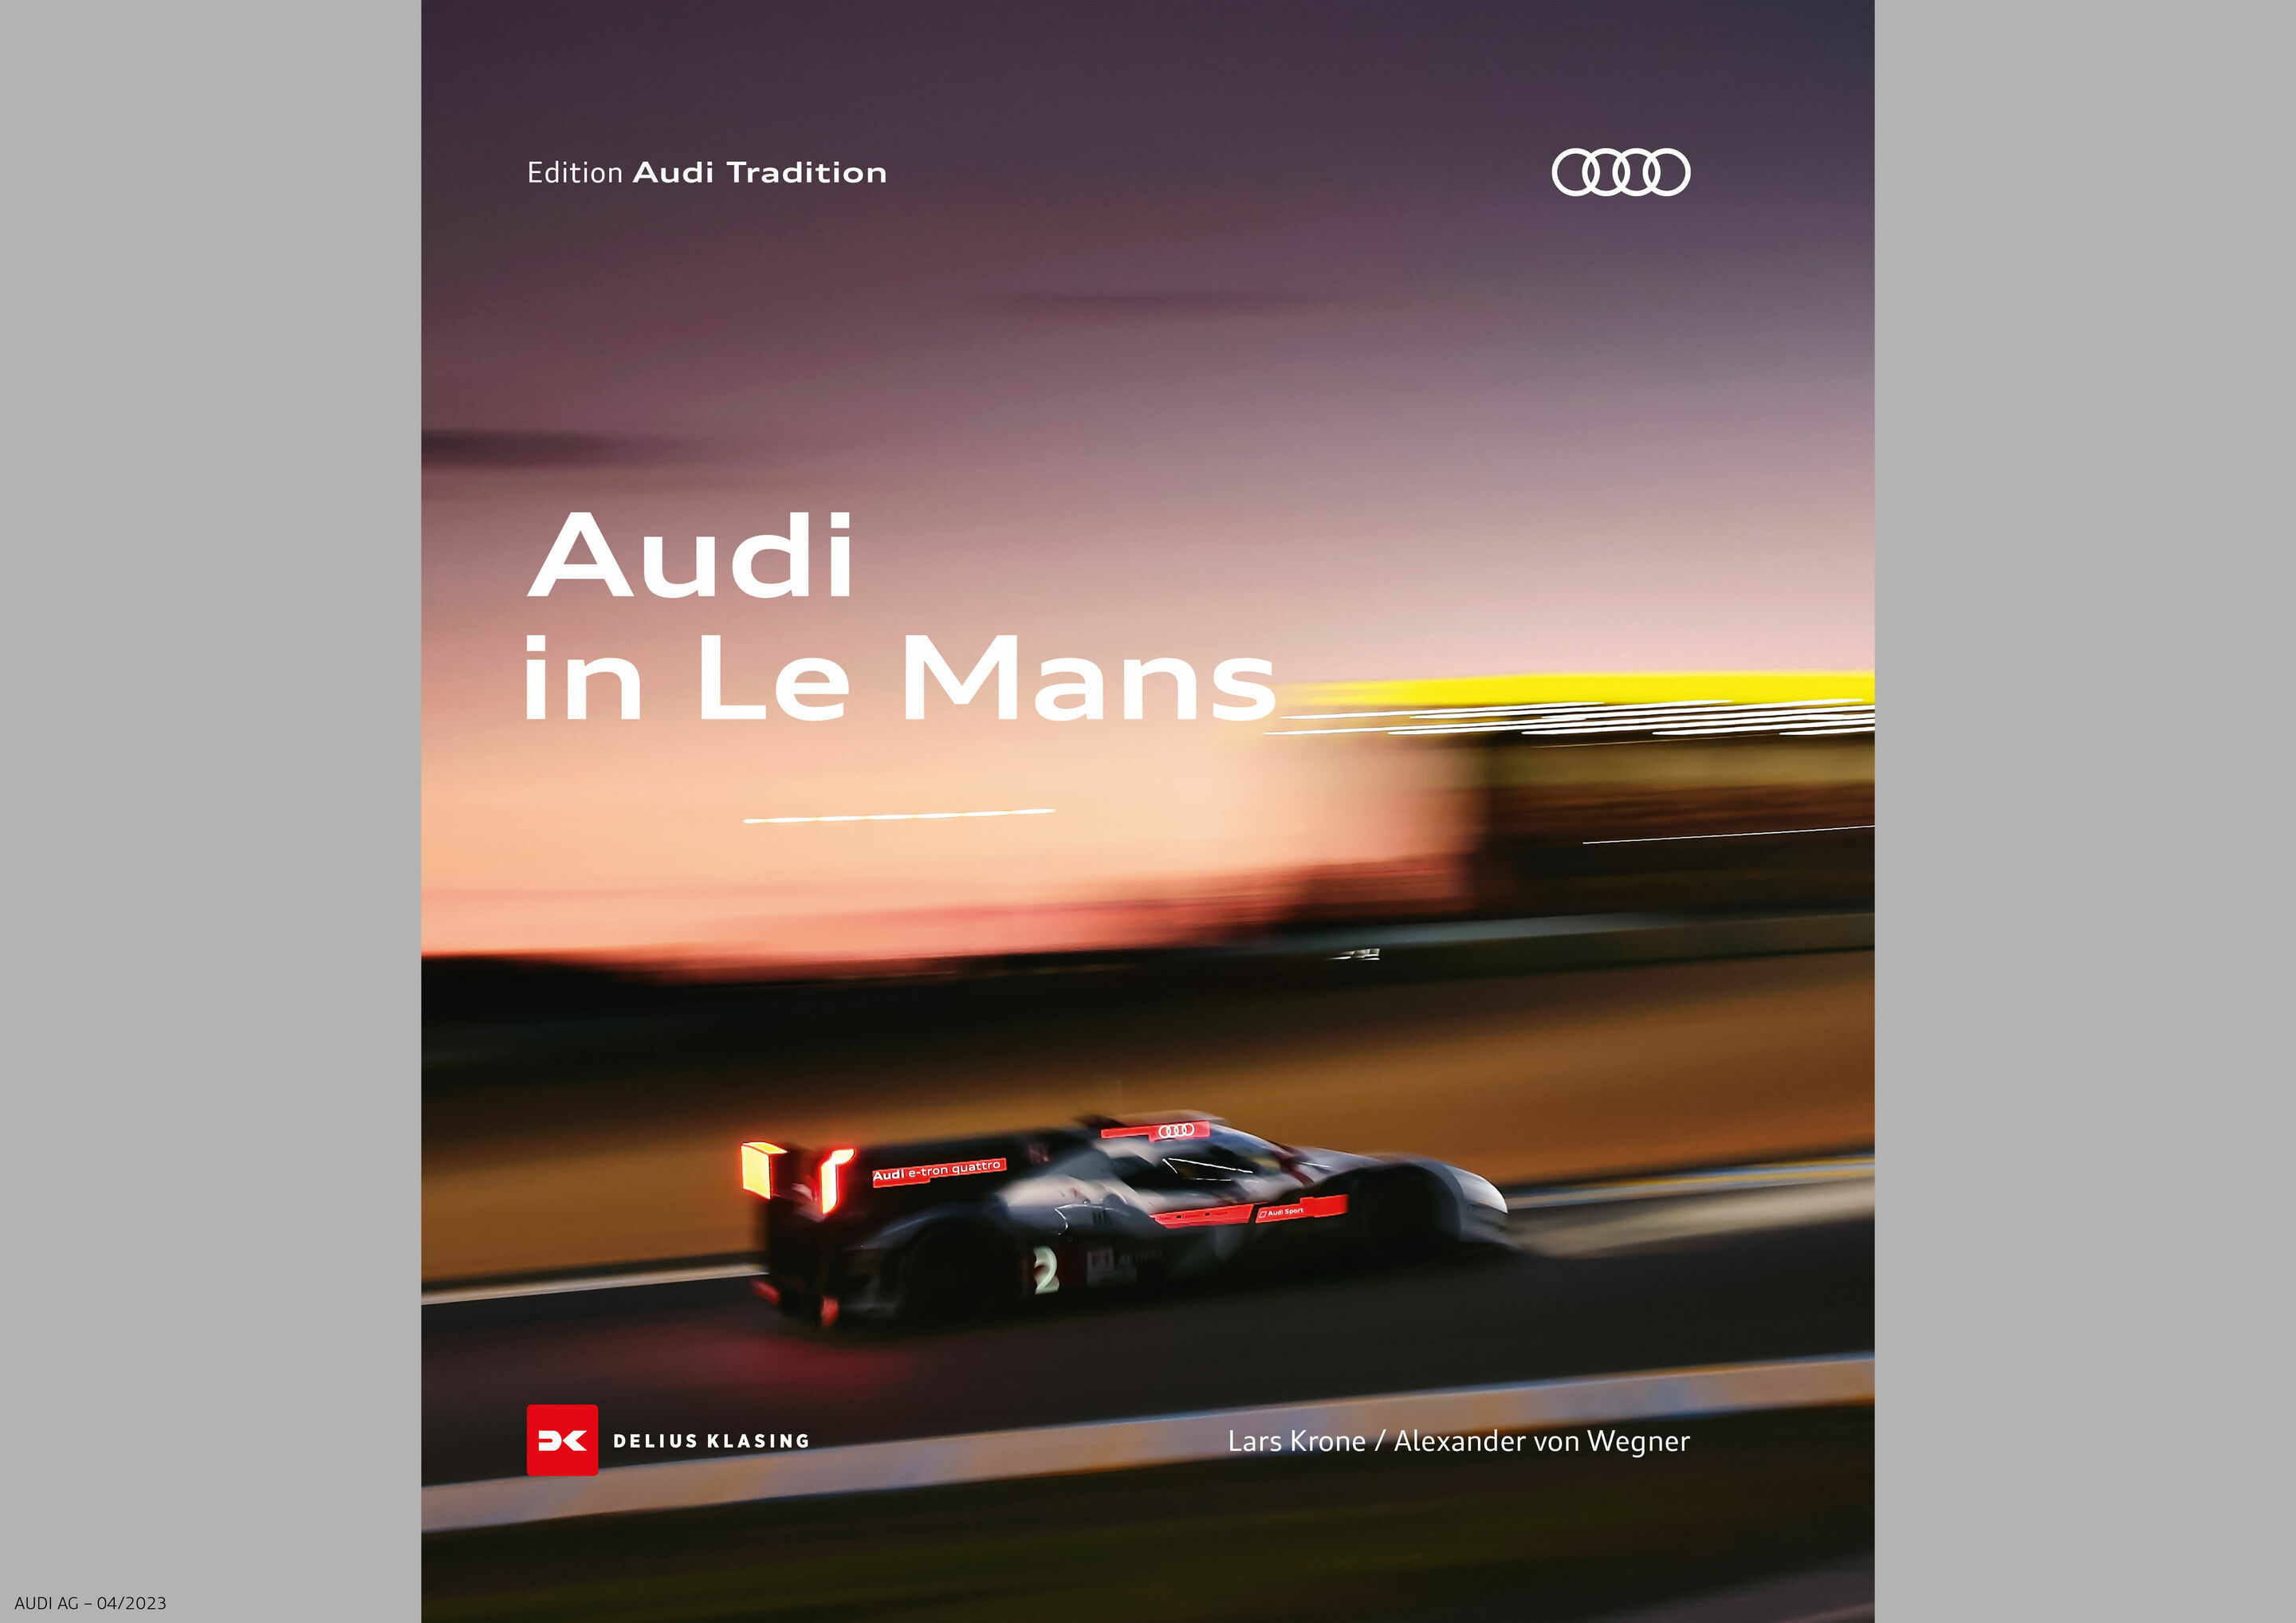 Neues Buch von Audi Tradition: „Audi in Le Mans“